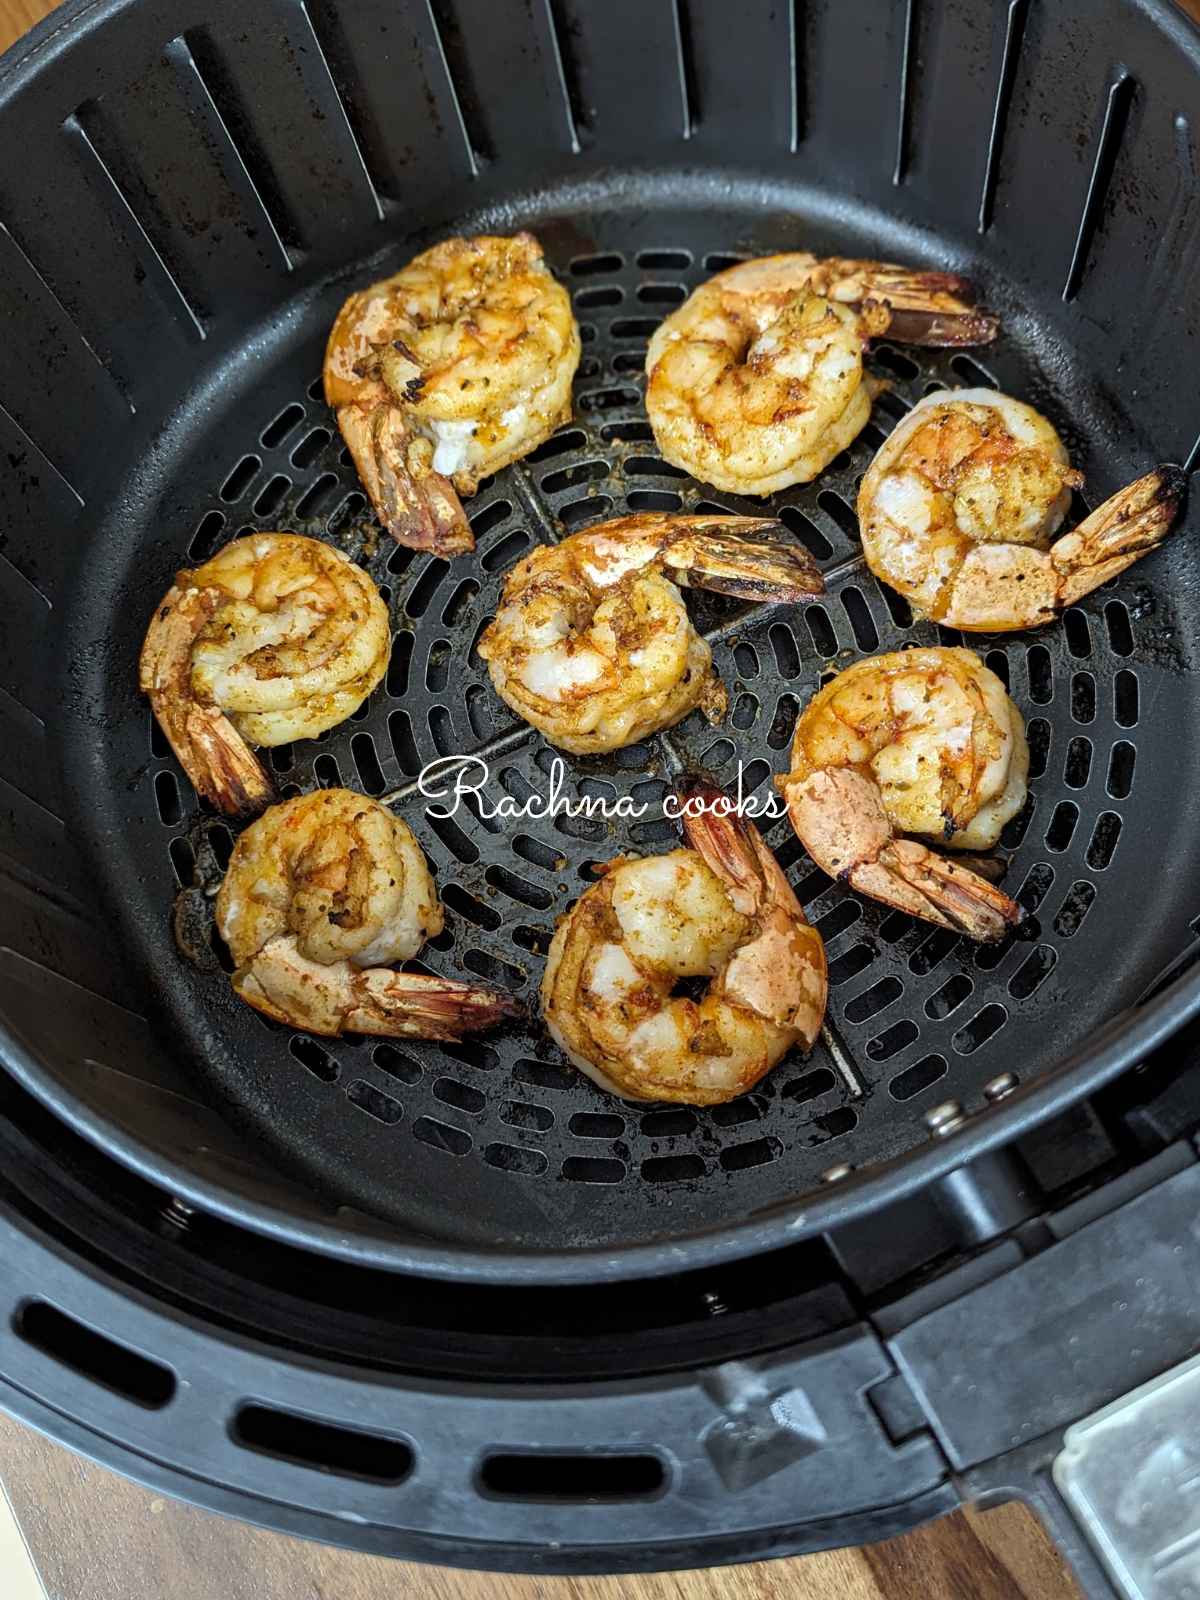 Shrimp after air frying in air fryer basket.